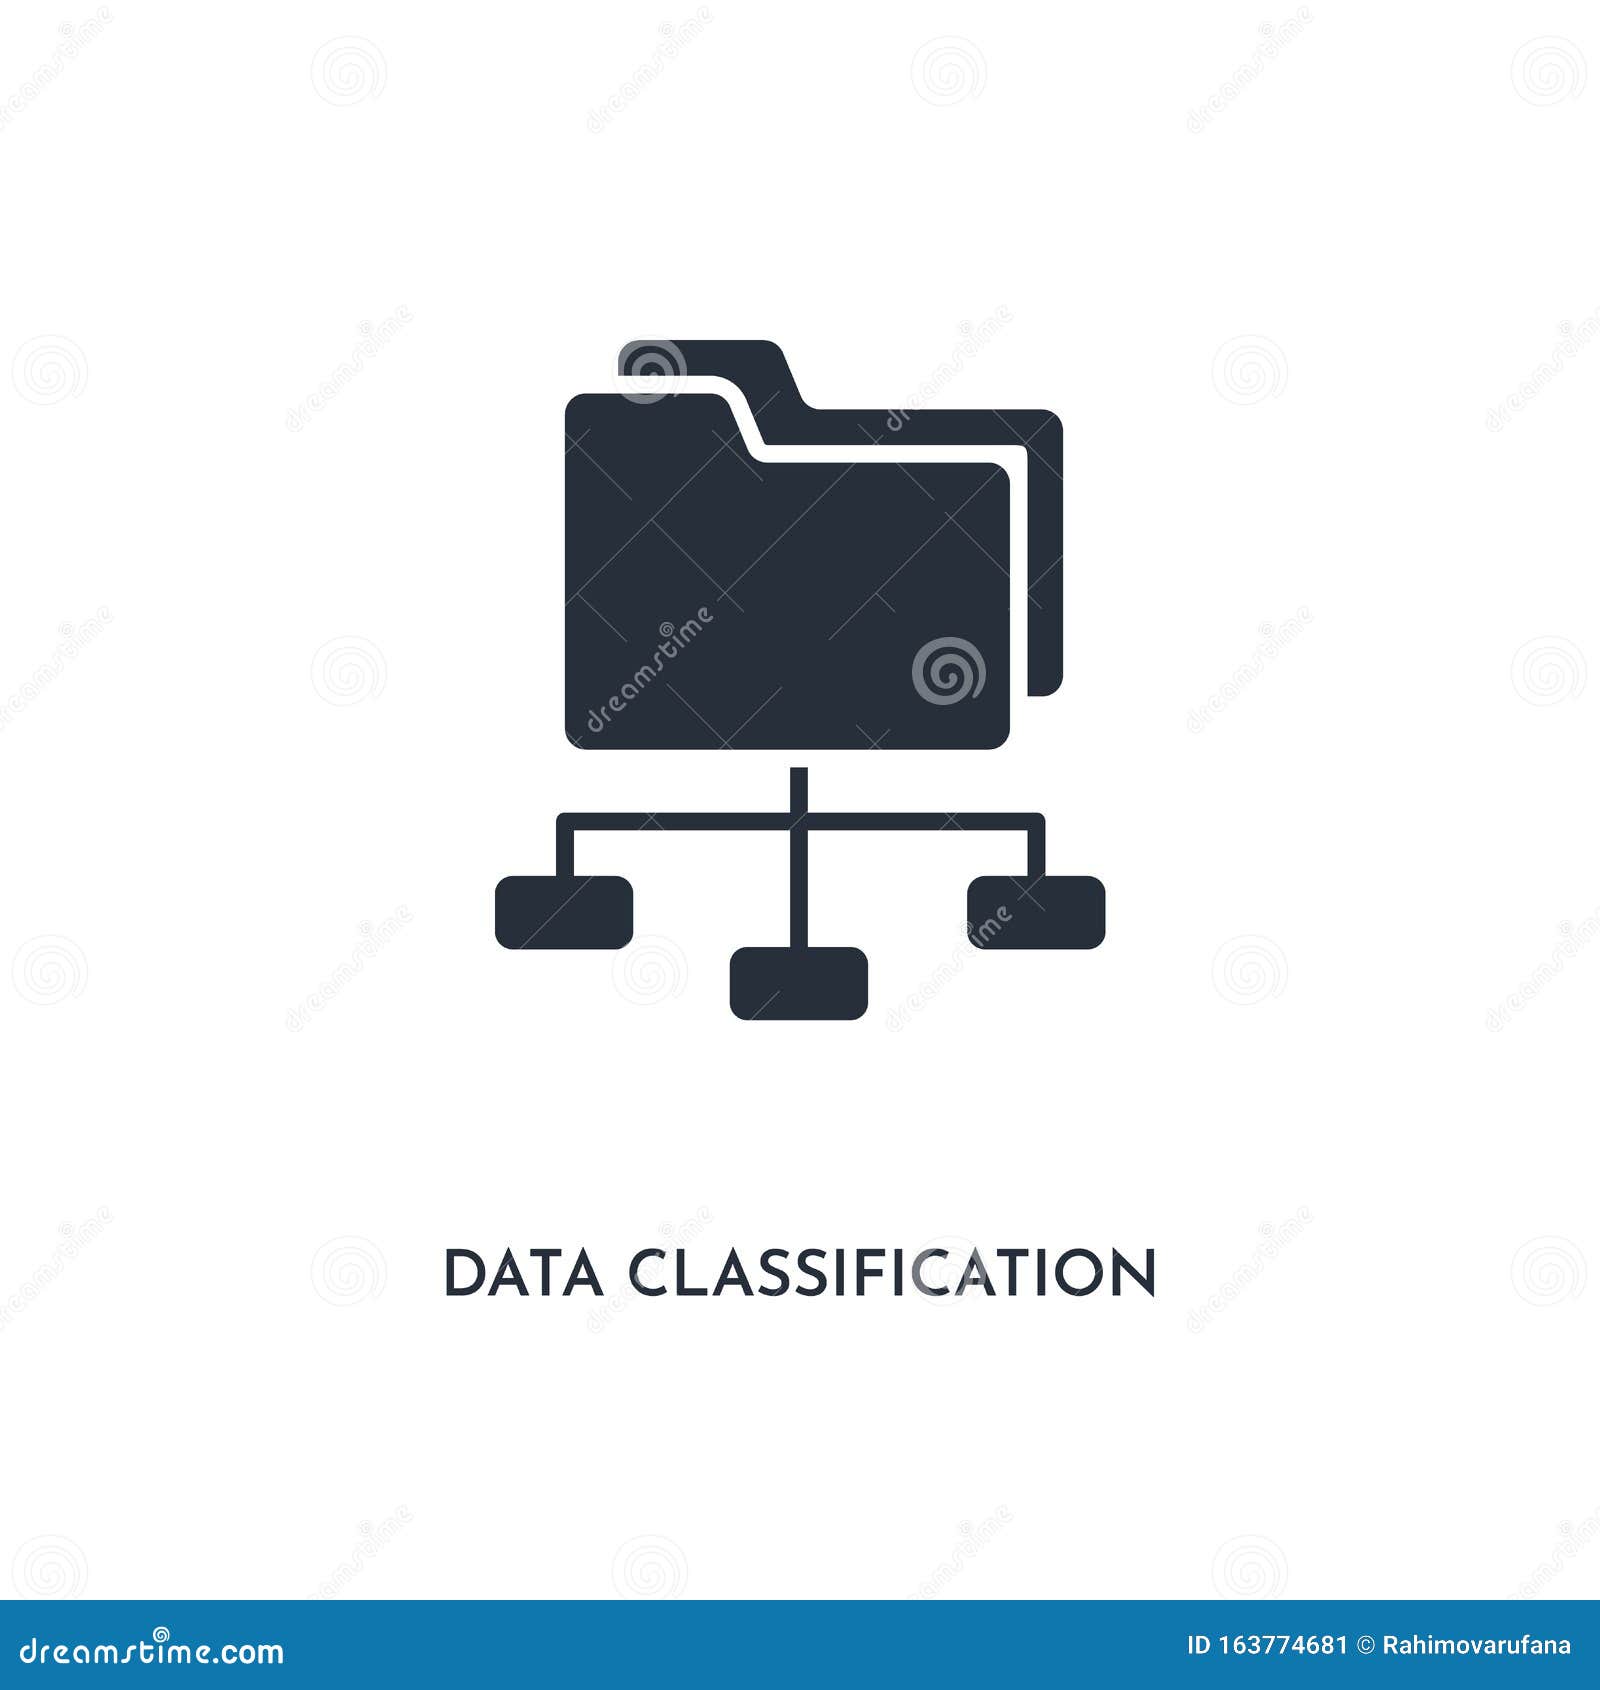 Data Classification Solid Illustration 137473254